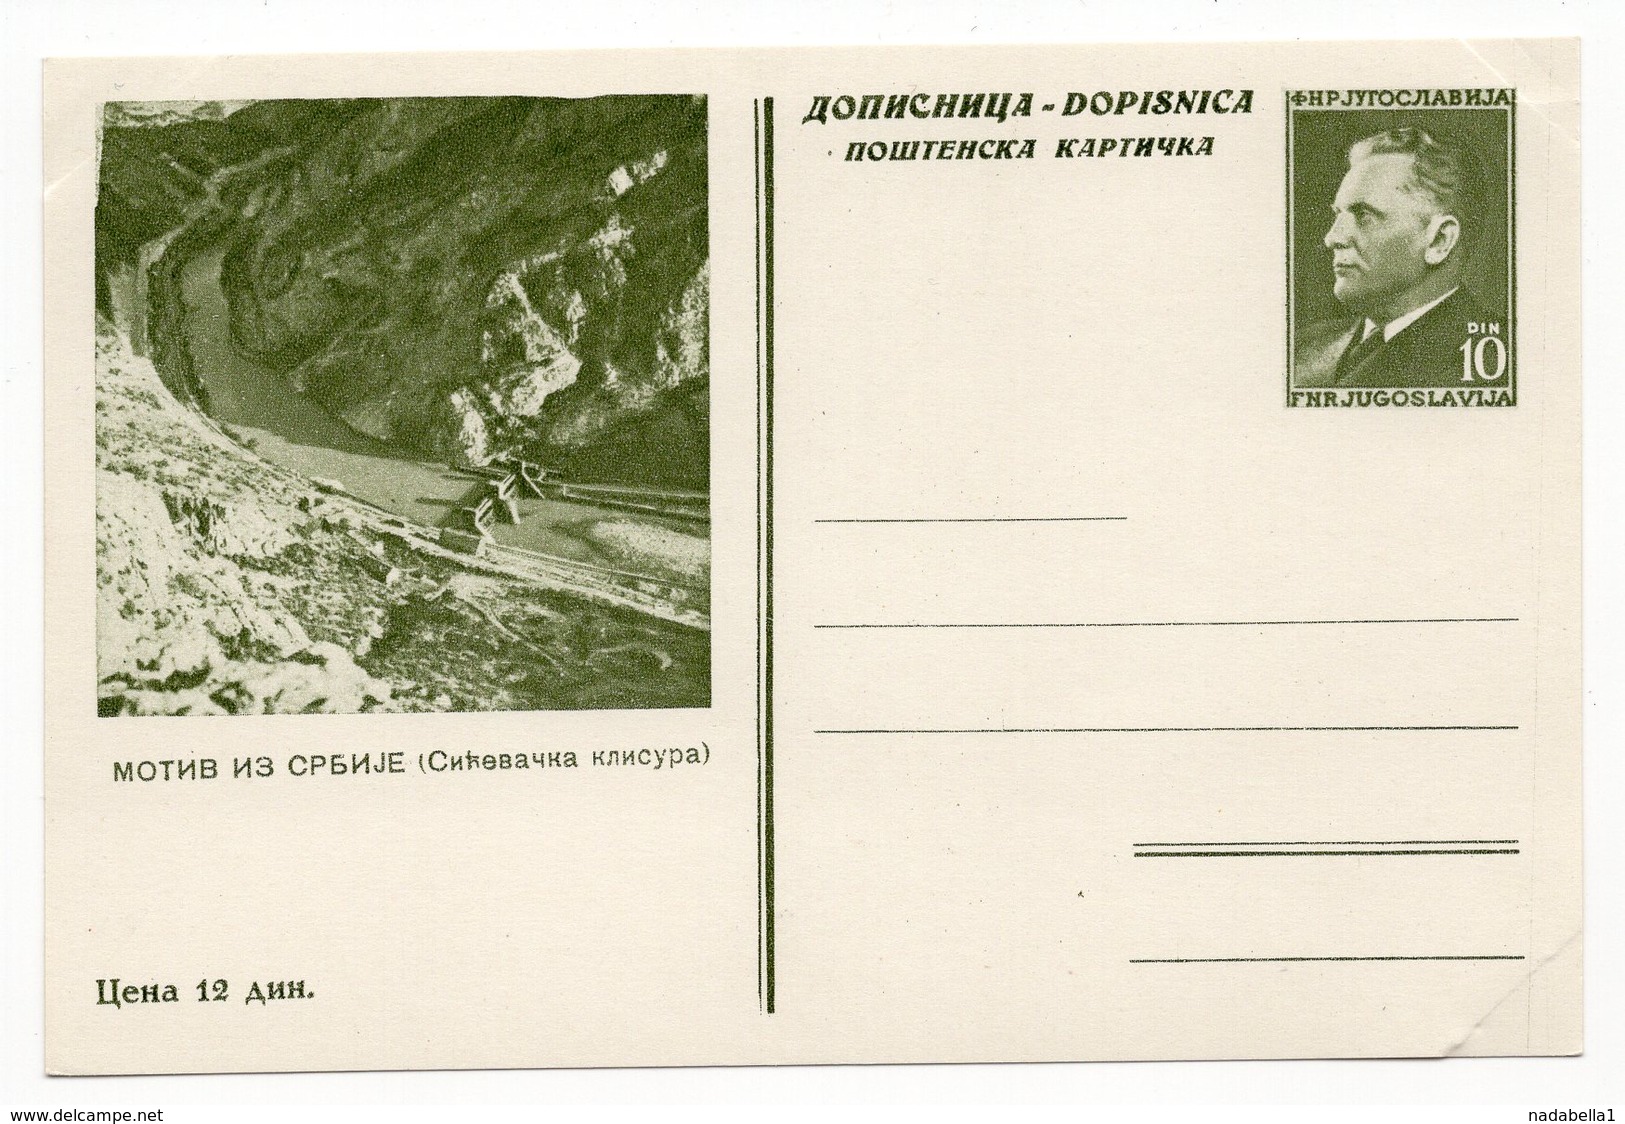 1953/4 YUGOSLAVIA, SERBIA, SICEVO GORGE, 7TH, REGULAR EDITION, TITO, STATIONERY CARD, MINT - Postal Stationery